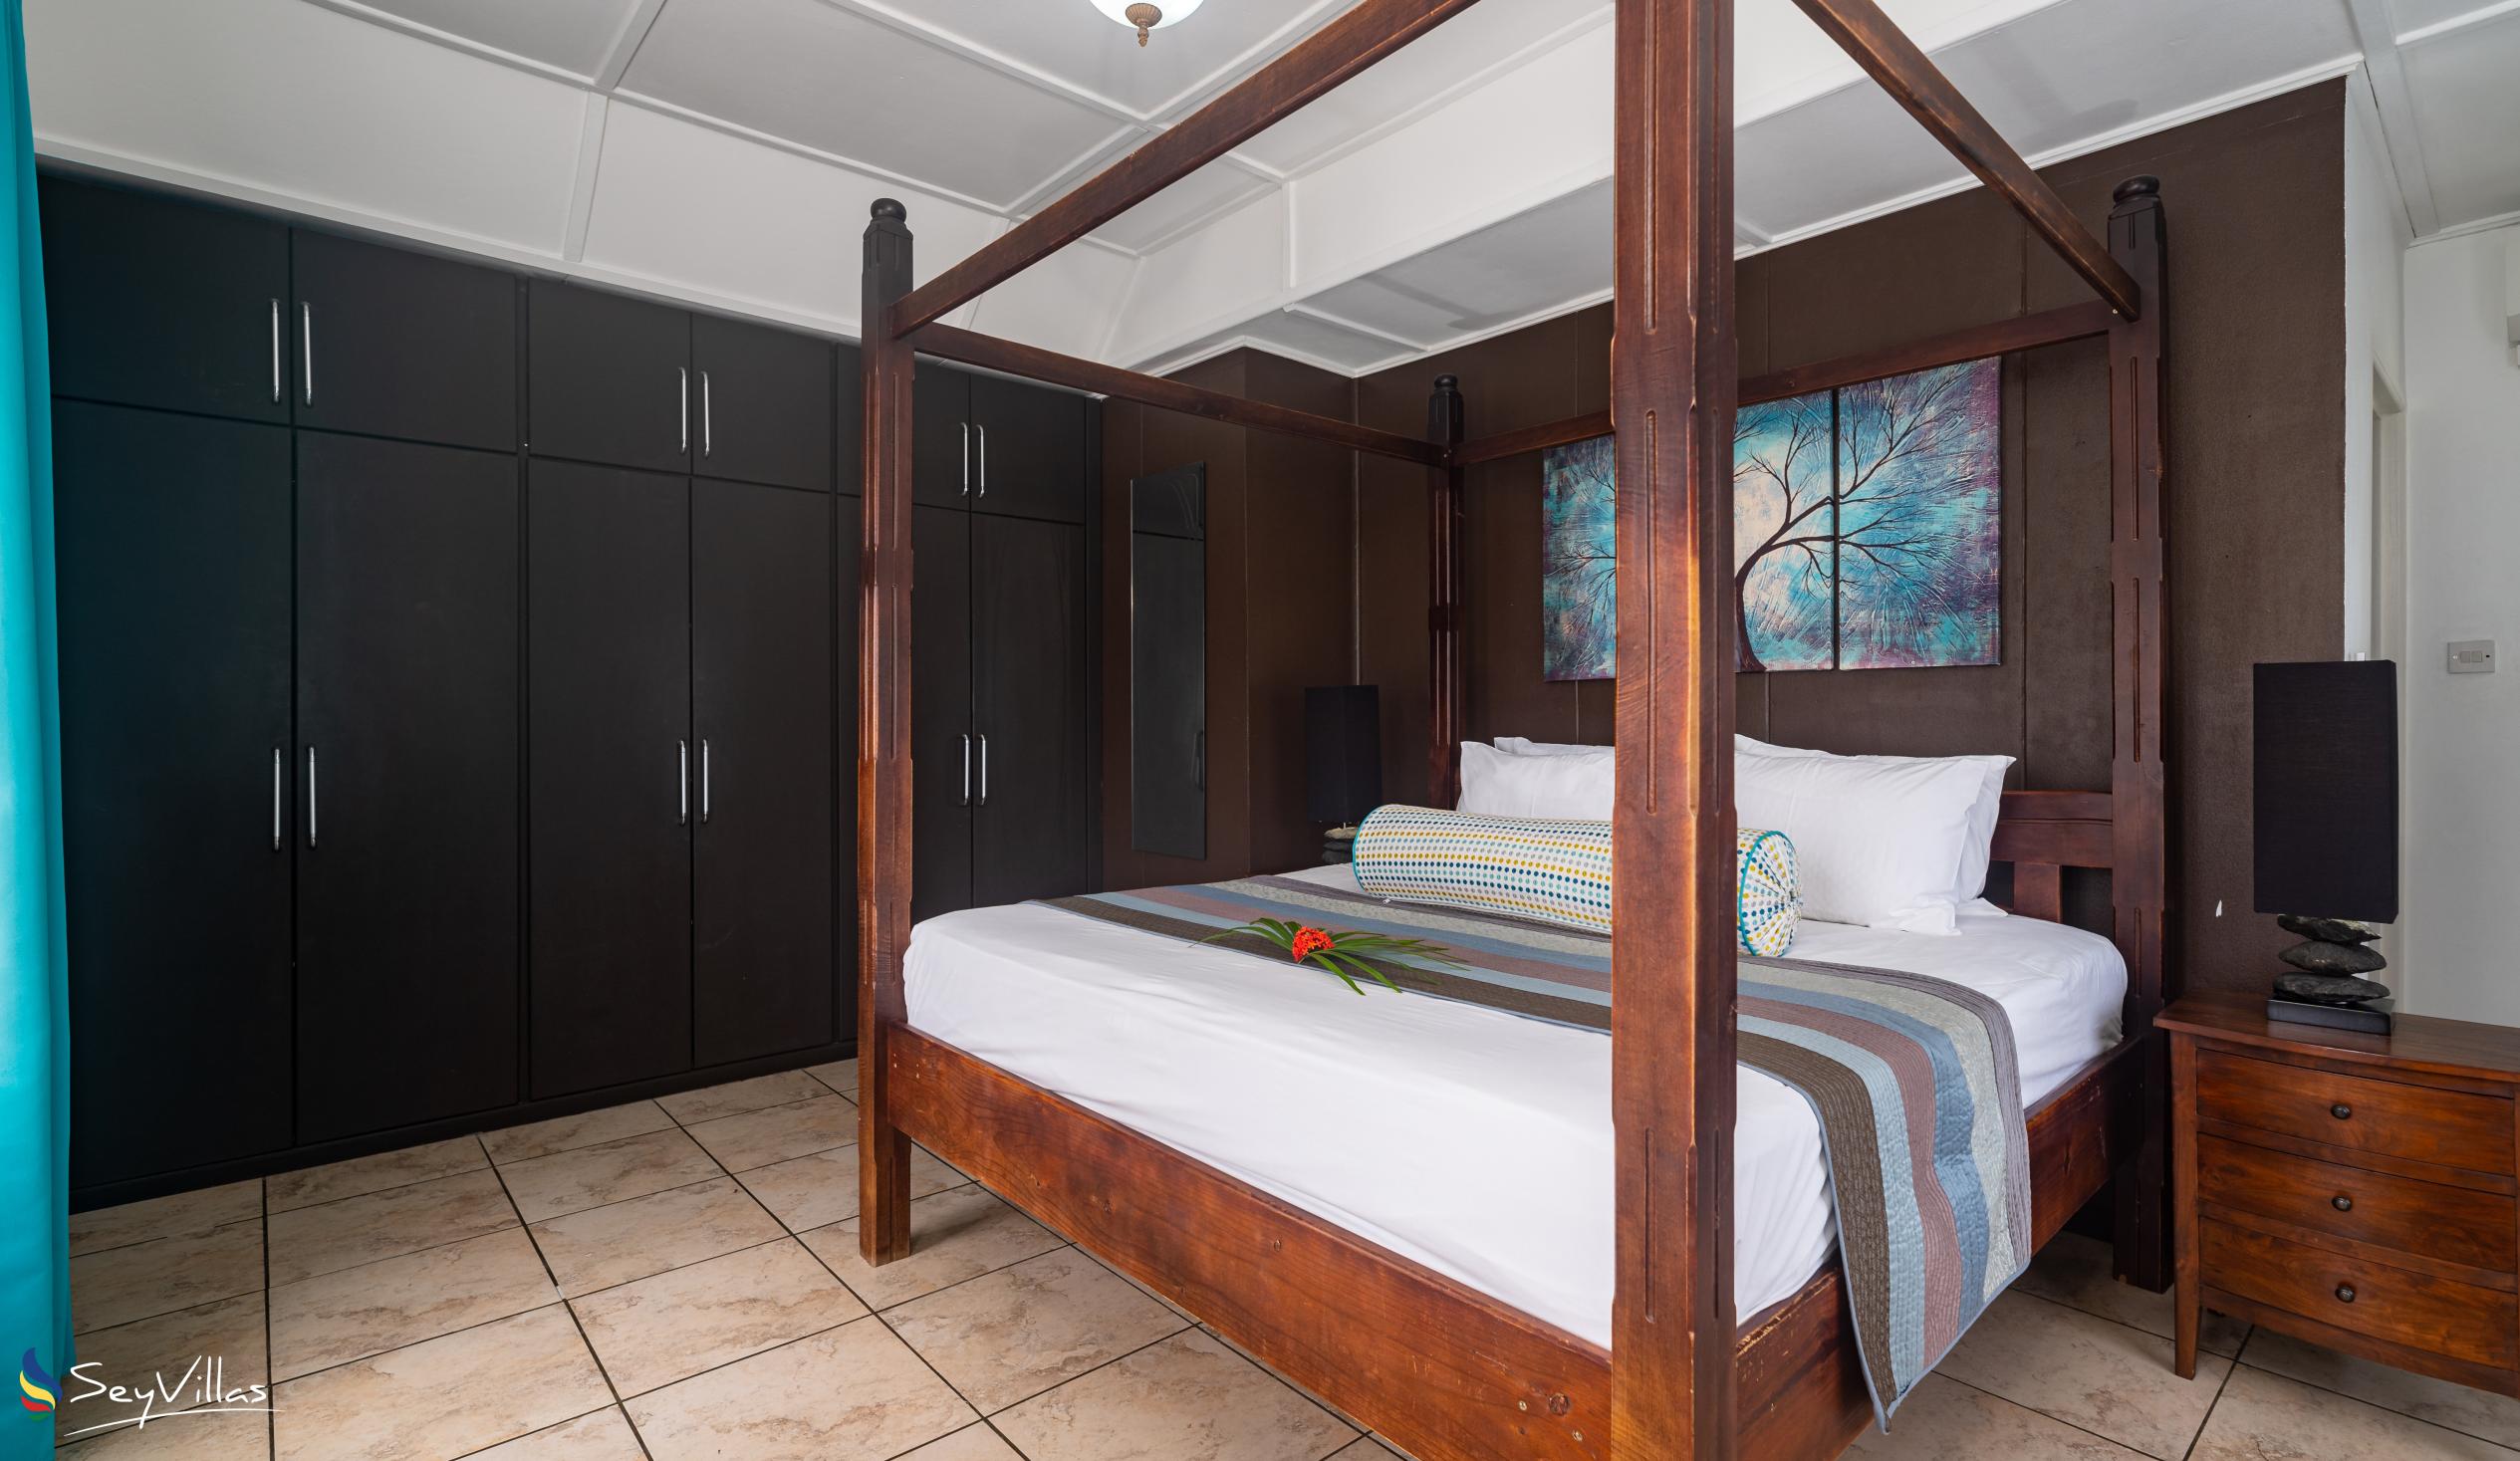 Photo 112: Stephna Residence - 2-Bedroom Villa - Mahé (Seychelles)